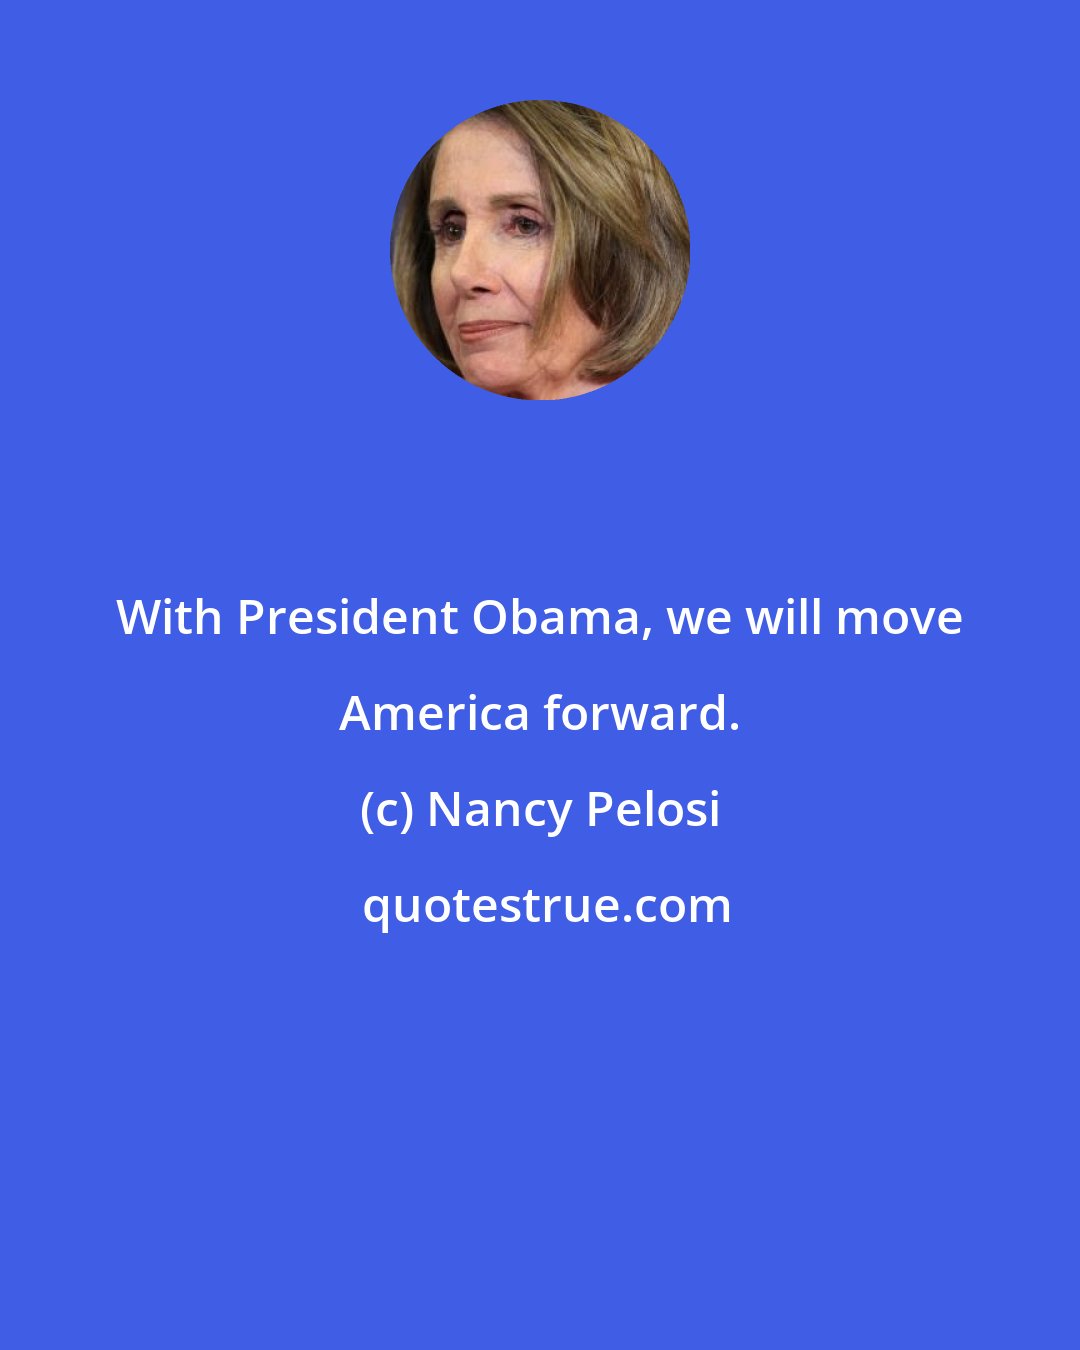 Nancy Pelosi: With President Obama, we will move America forward.